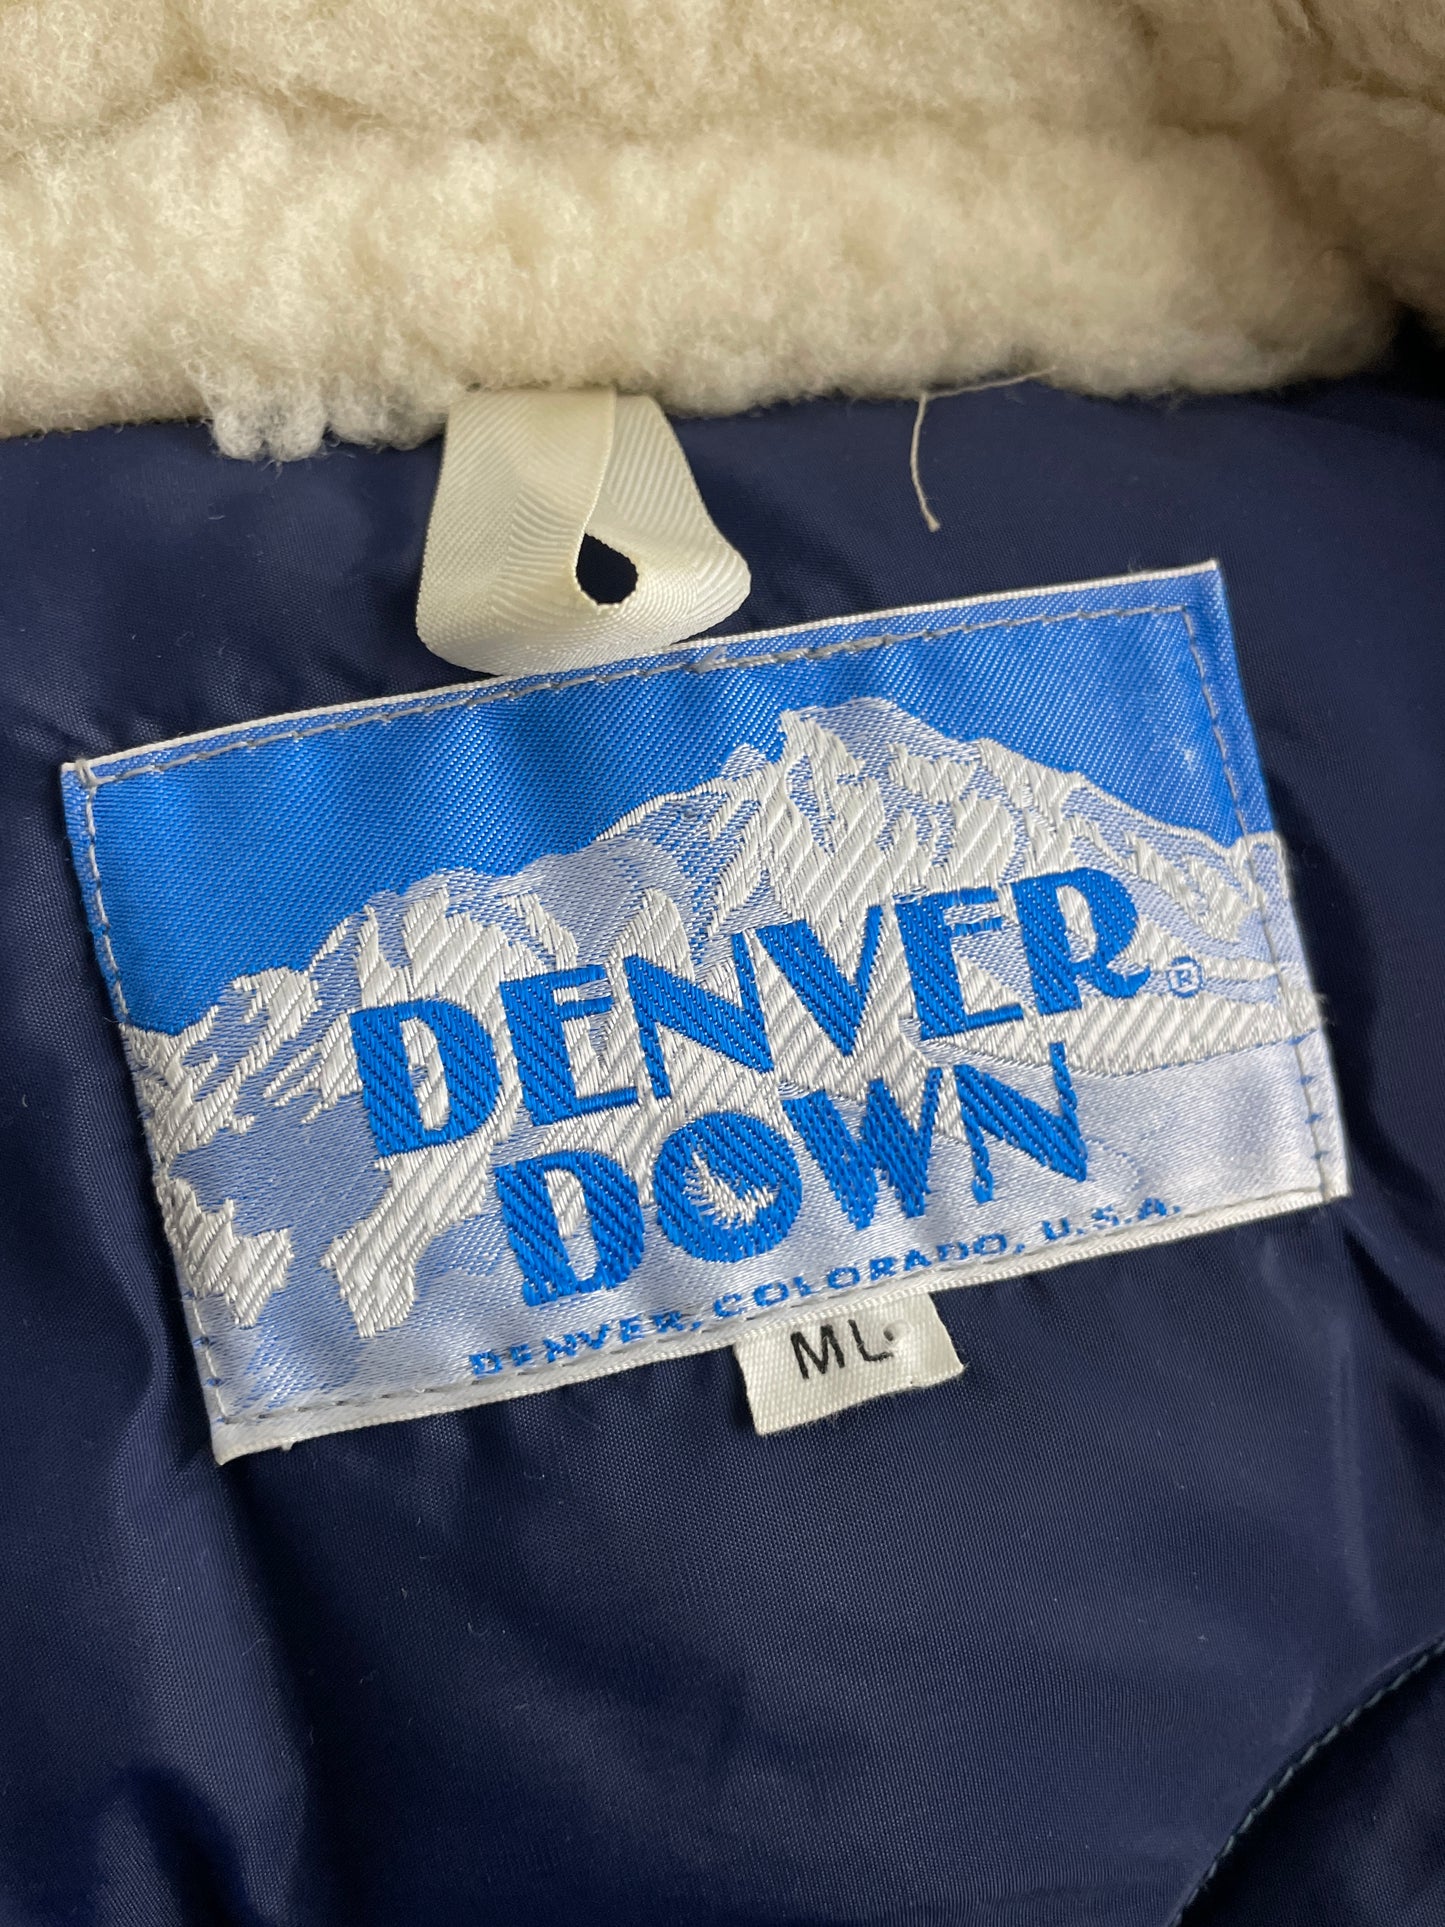 70's Denver Down Vest [M]